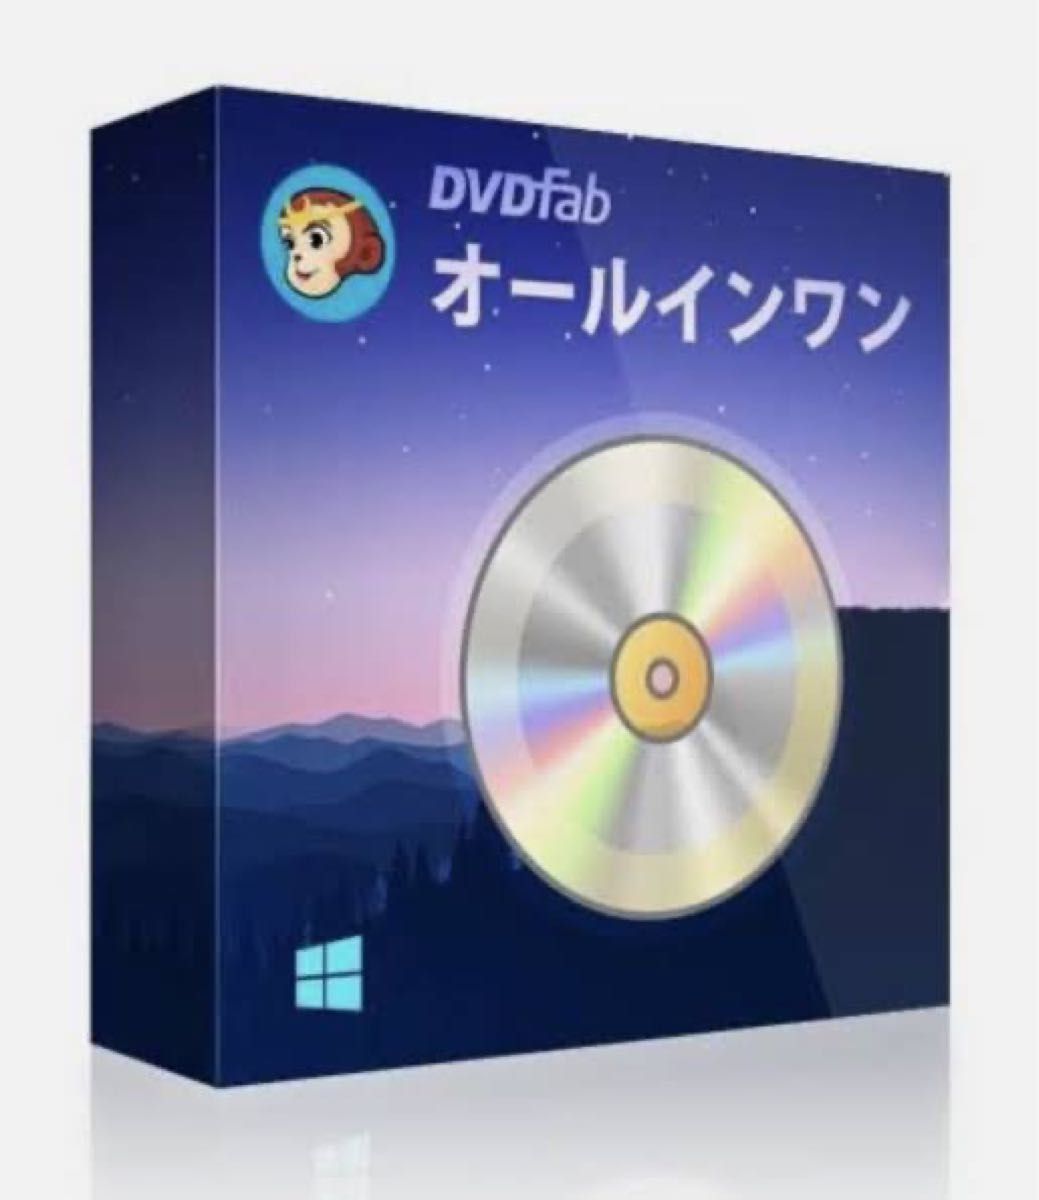 DvDFab13 オールインワン(streamfab) 永久使用版、アップデート対応、日本版